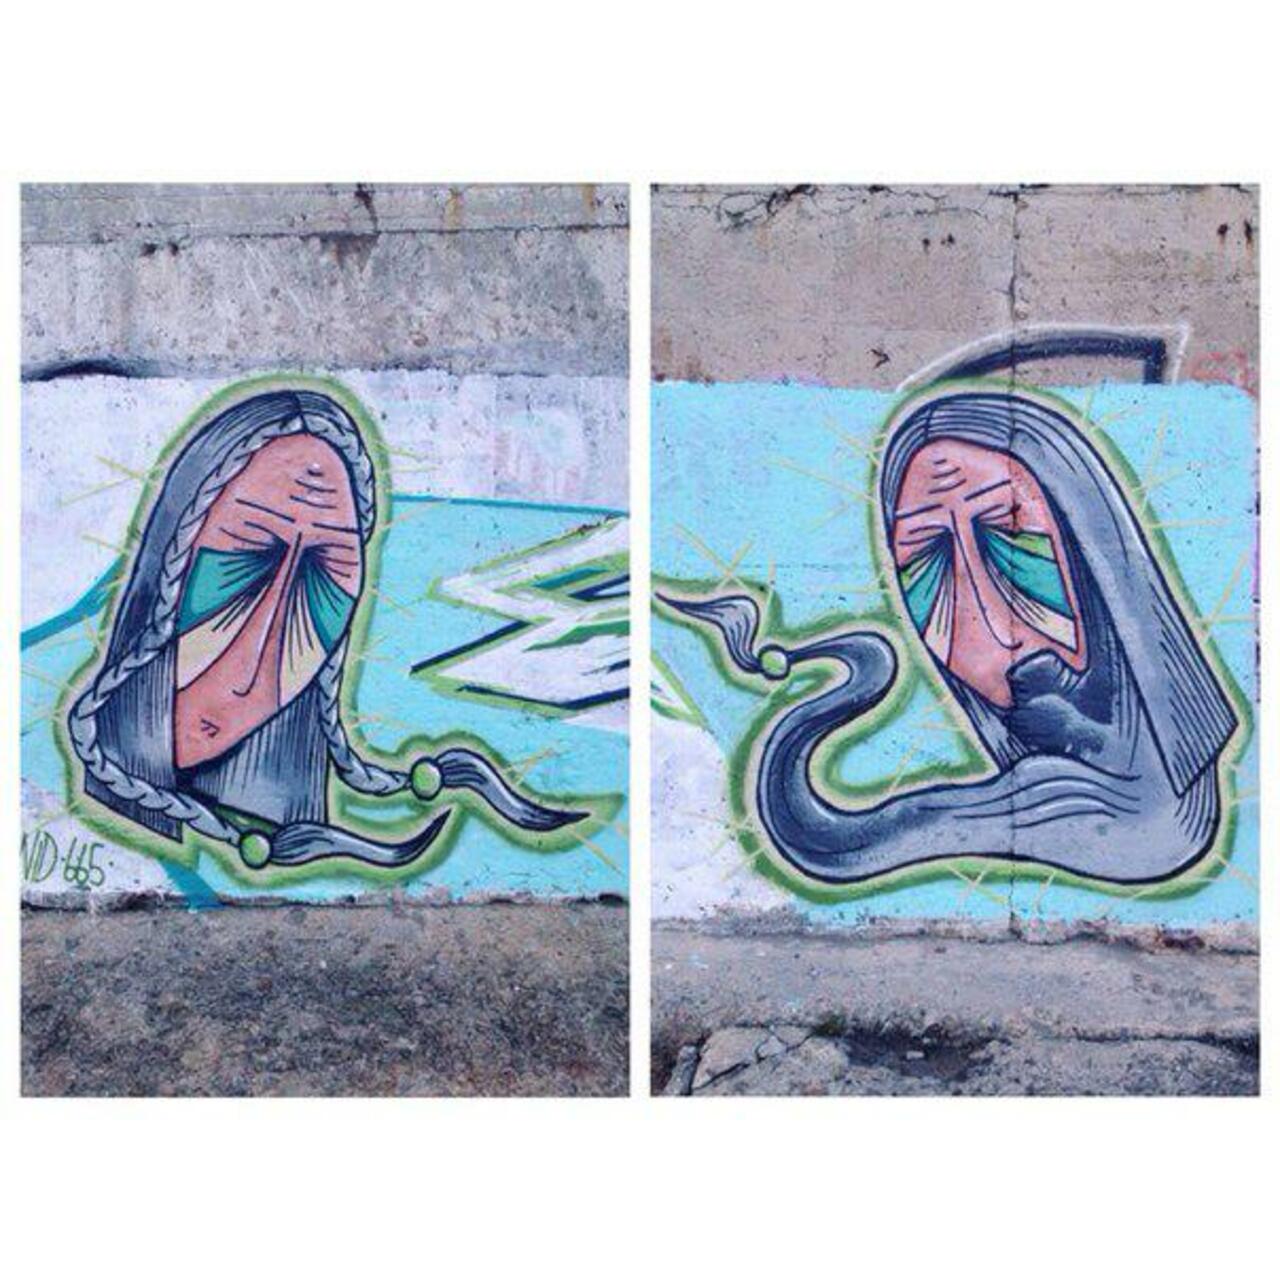 #Kawe #wall #faces #indian #eyes #art #streetart #graffiti http://t.co/ctBiCDQxUw